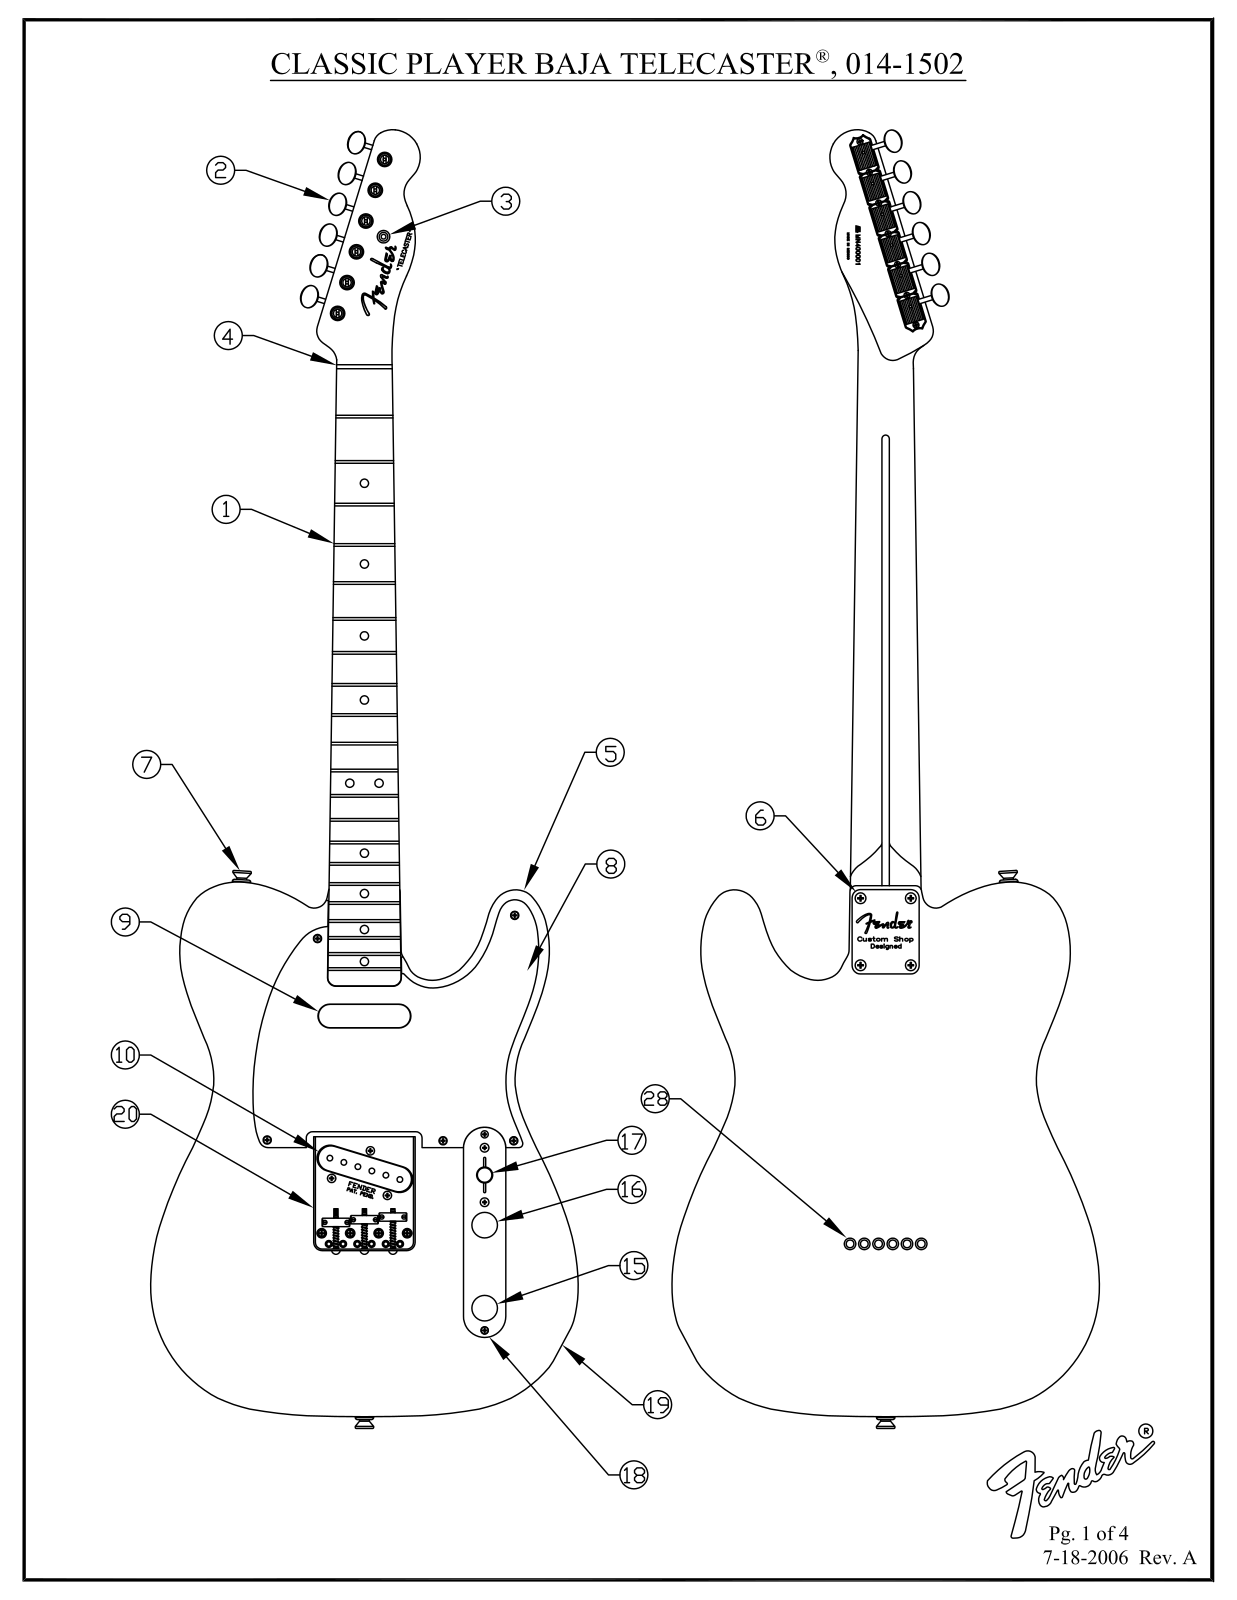 Fender Classic-Player-Baja-Telecaster Service Manual